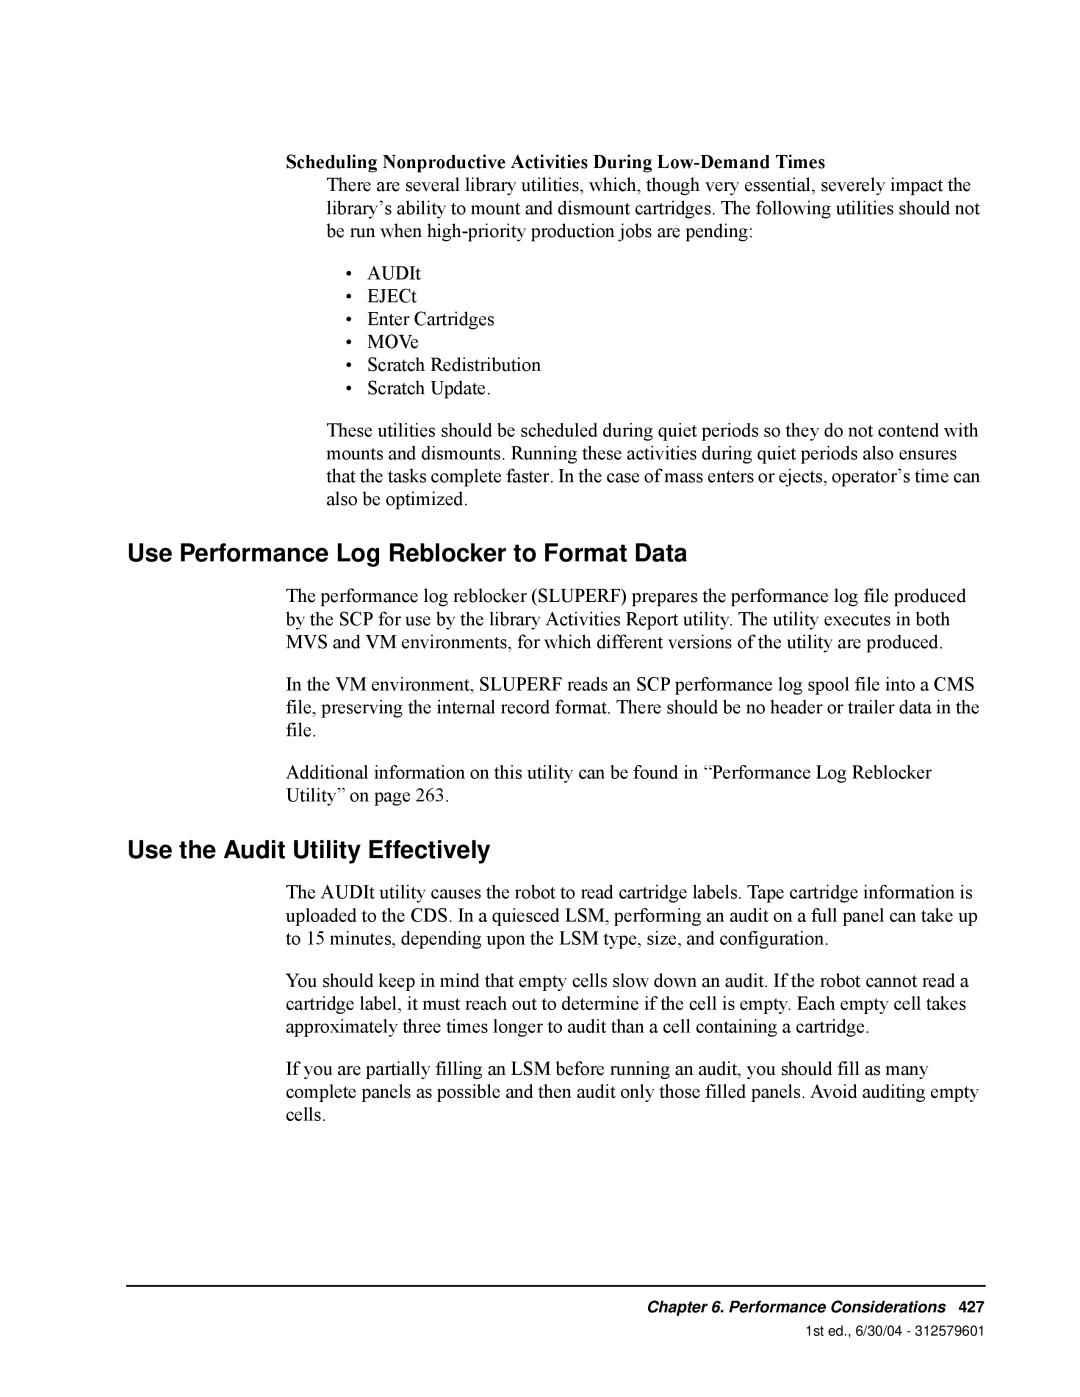 StorageTek 6 manual Use Performance Log Reblocker to Format Data, Use the Audit Utility Effectively 